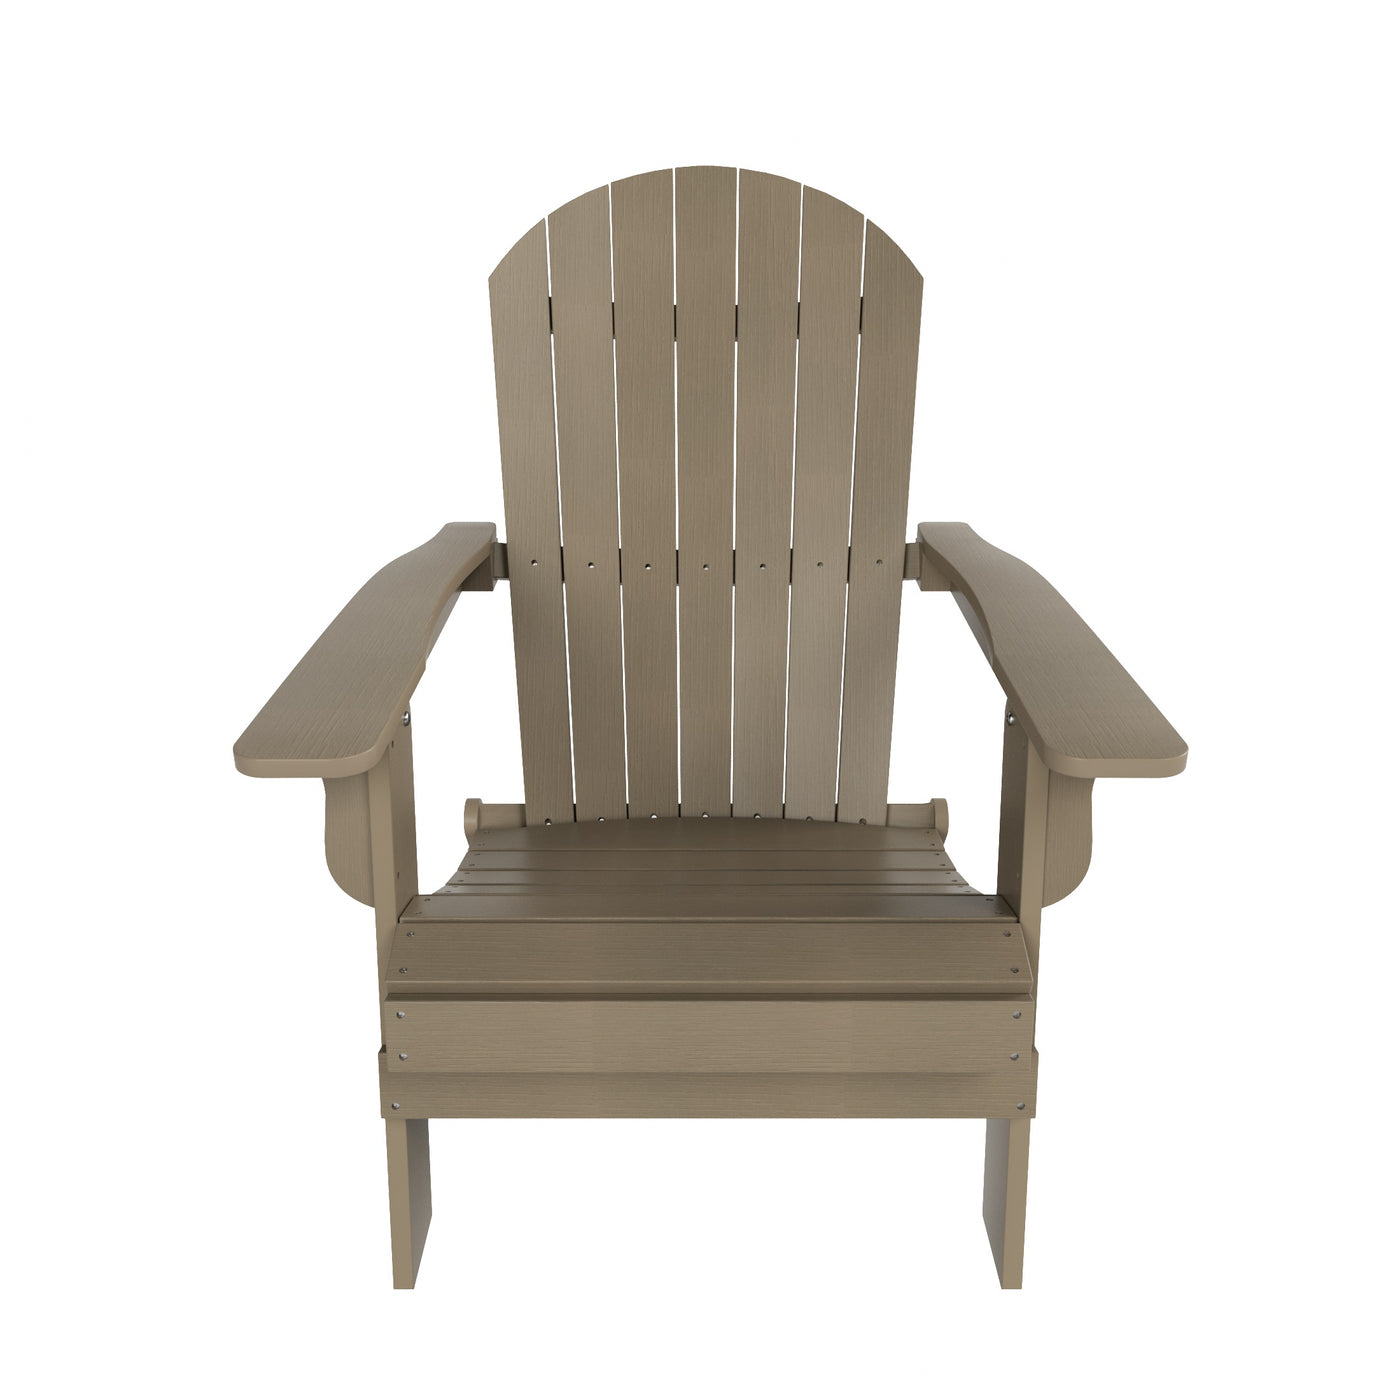 Tuscany HIPS Outdoor Folding Adirondack Chair